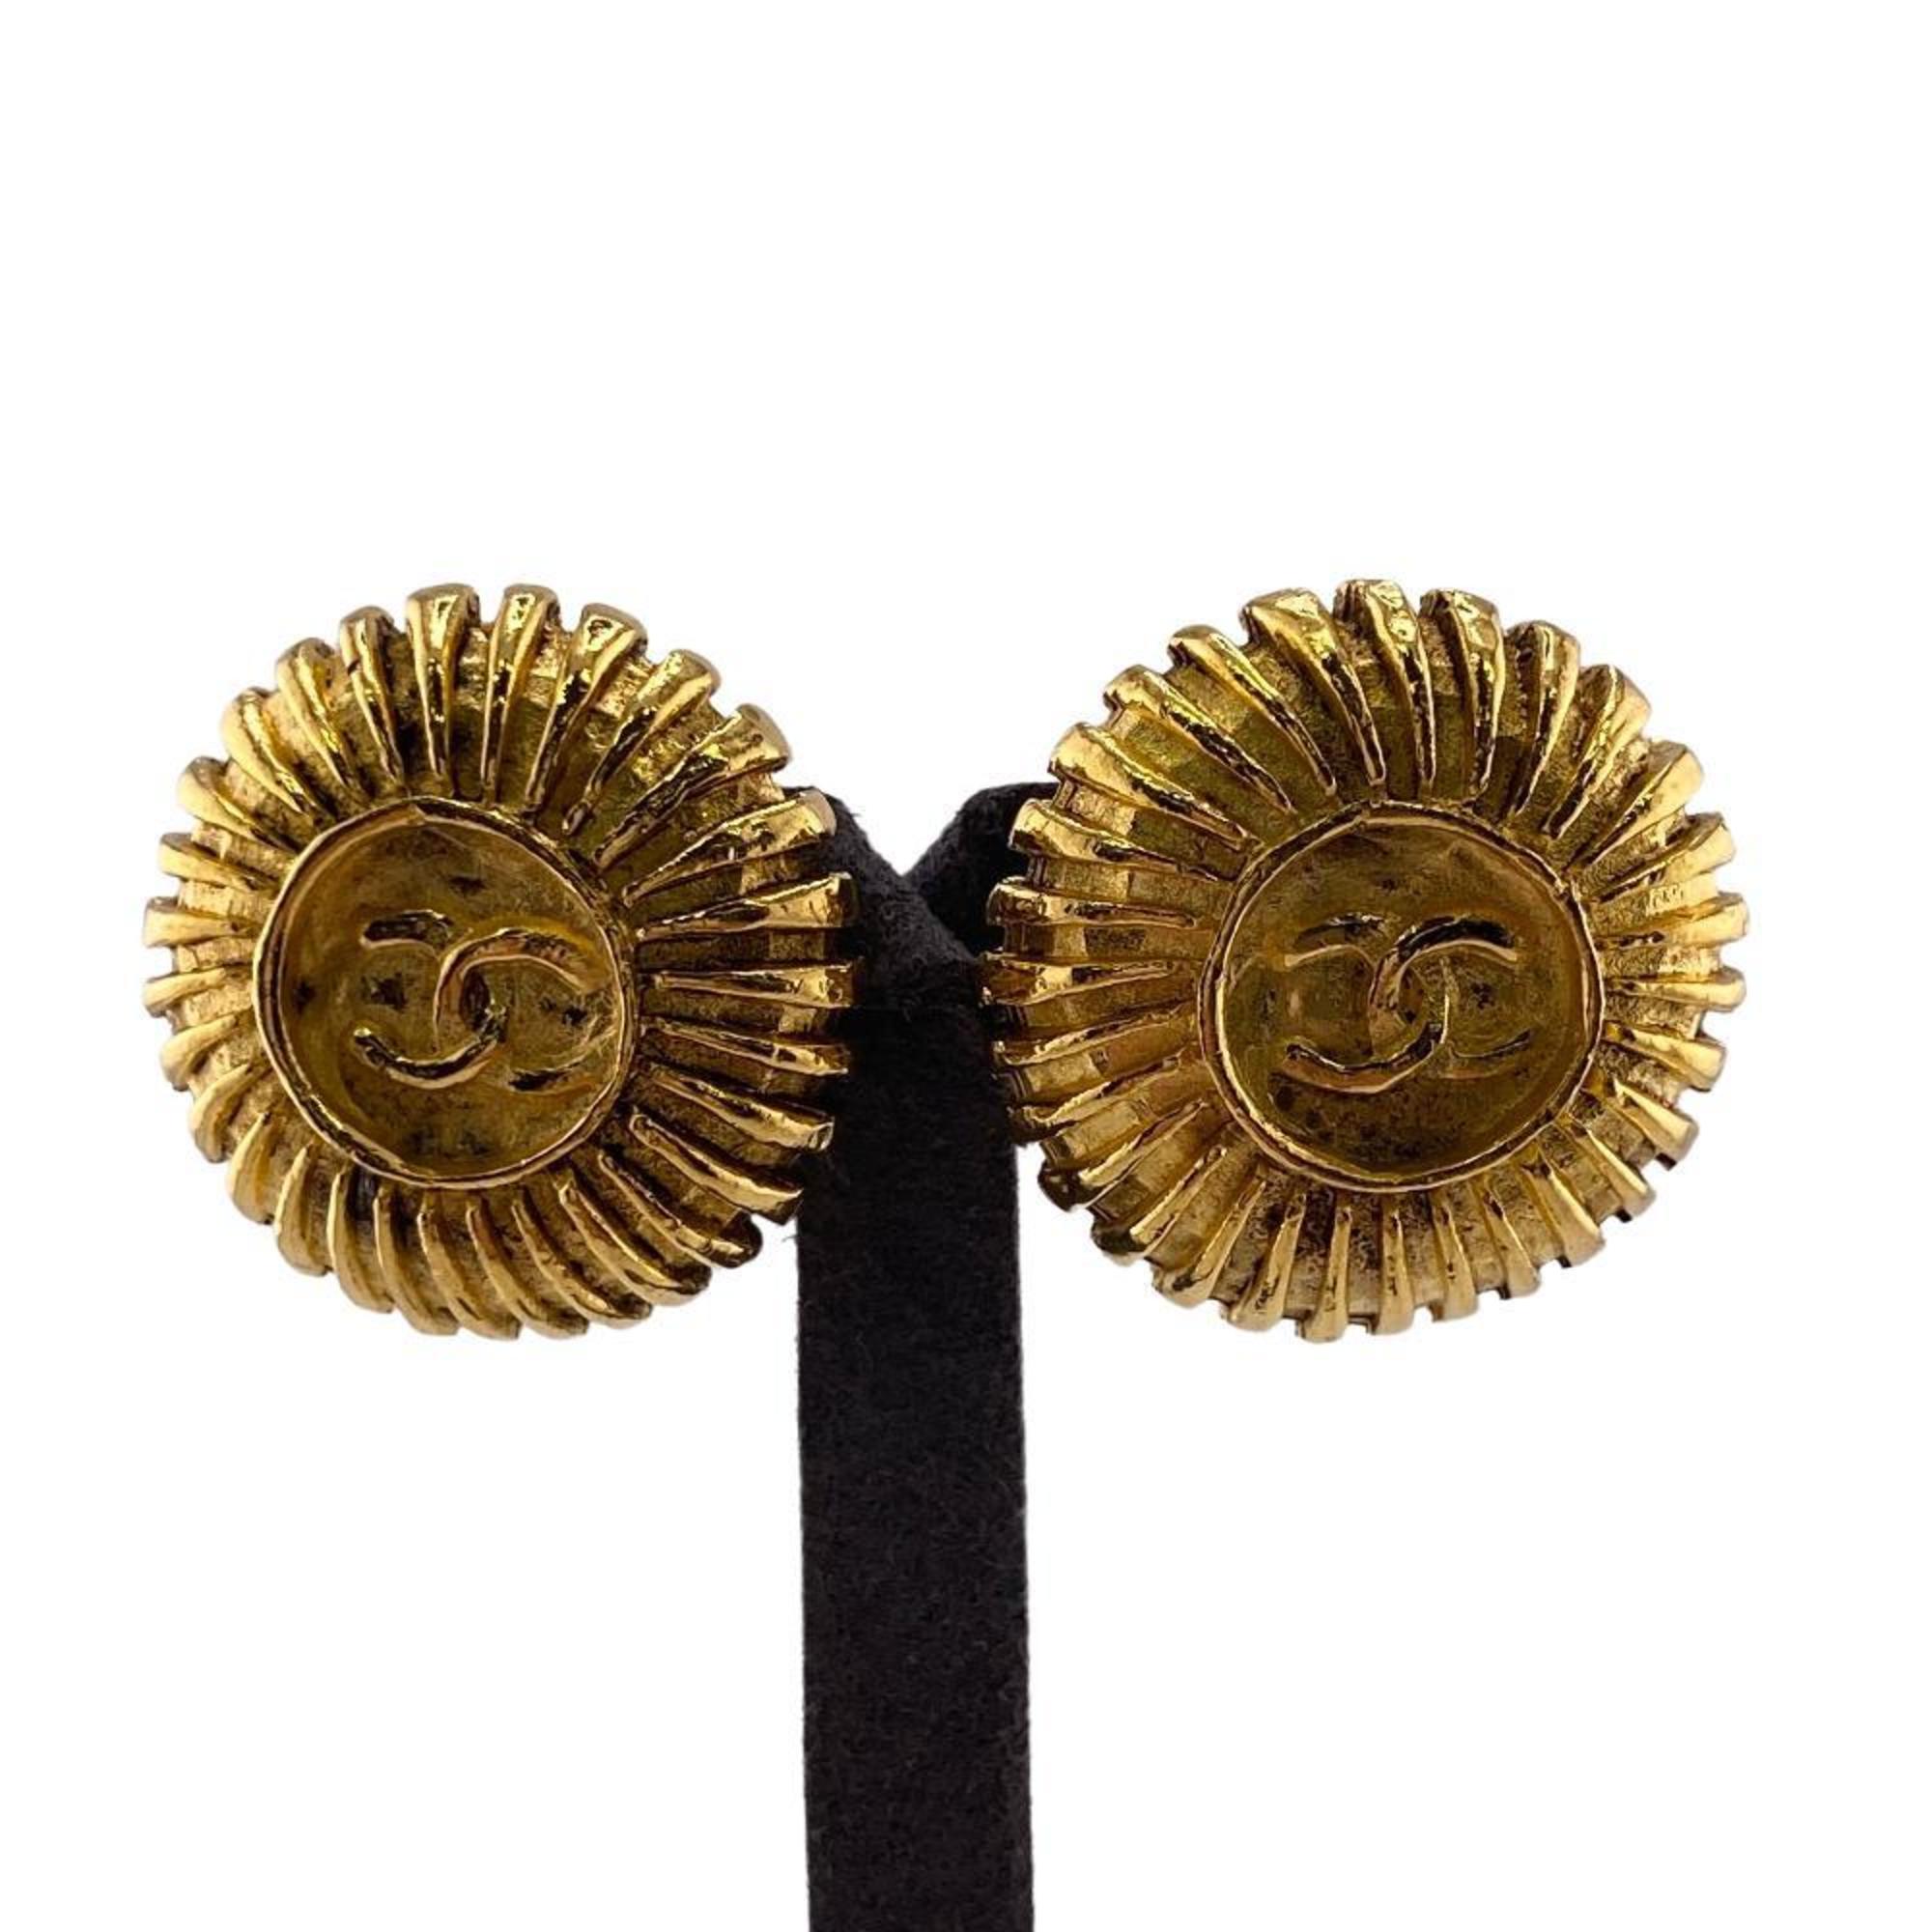 CHANEL Chanel earrings gold ladies